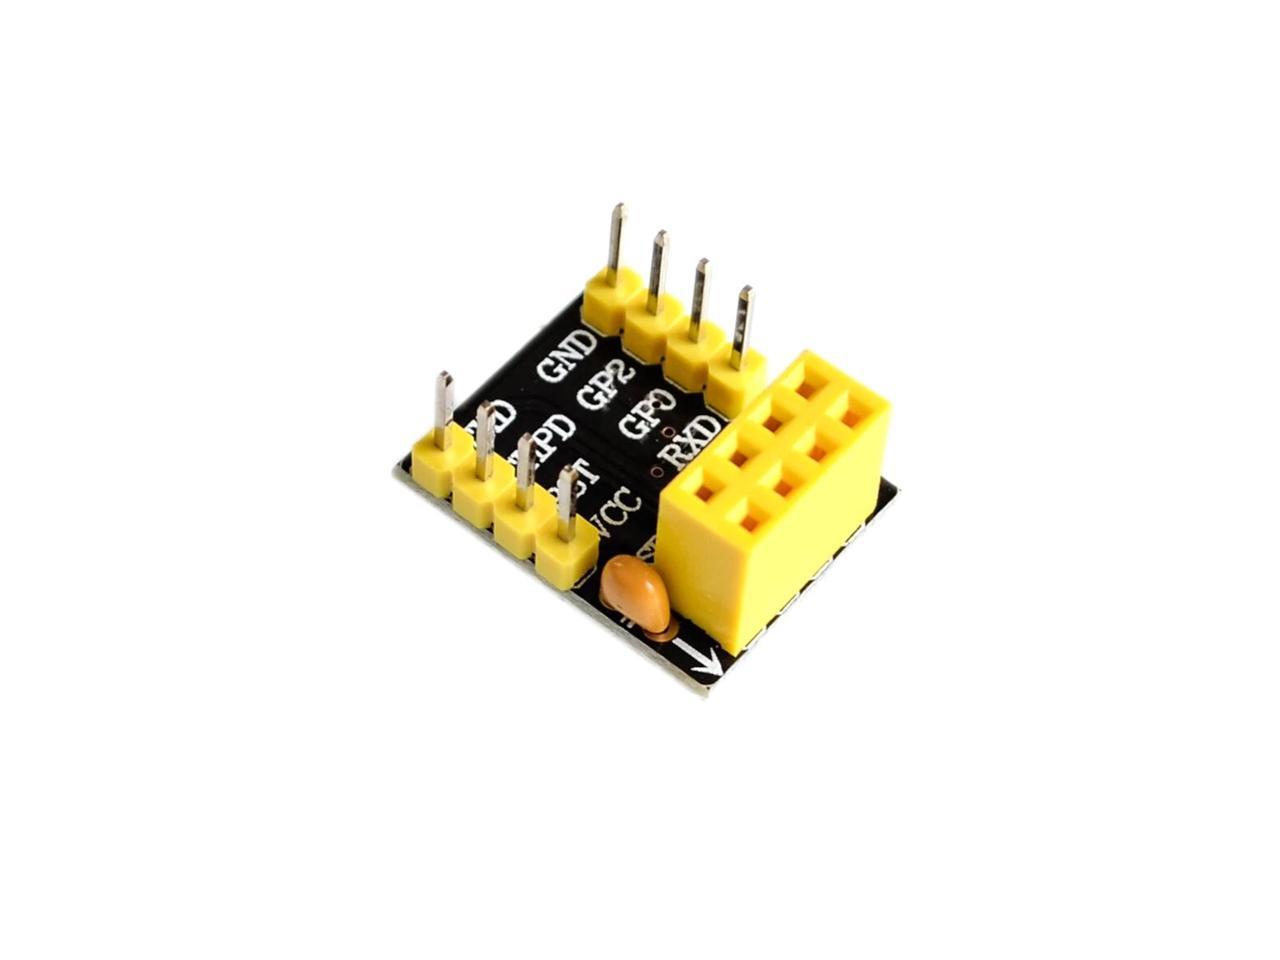 Muccus for ESP-01 Esp8266 ESP-01S Model of The ESP8266 Serial Breadboard Adapter to WiFi Transceiver Module Breakout UART Module 